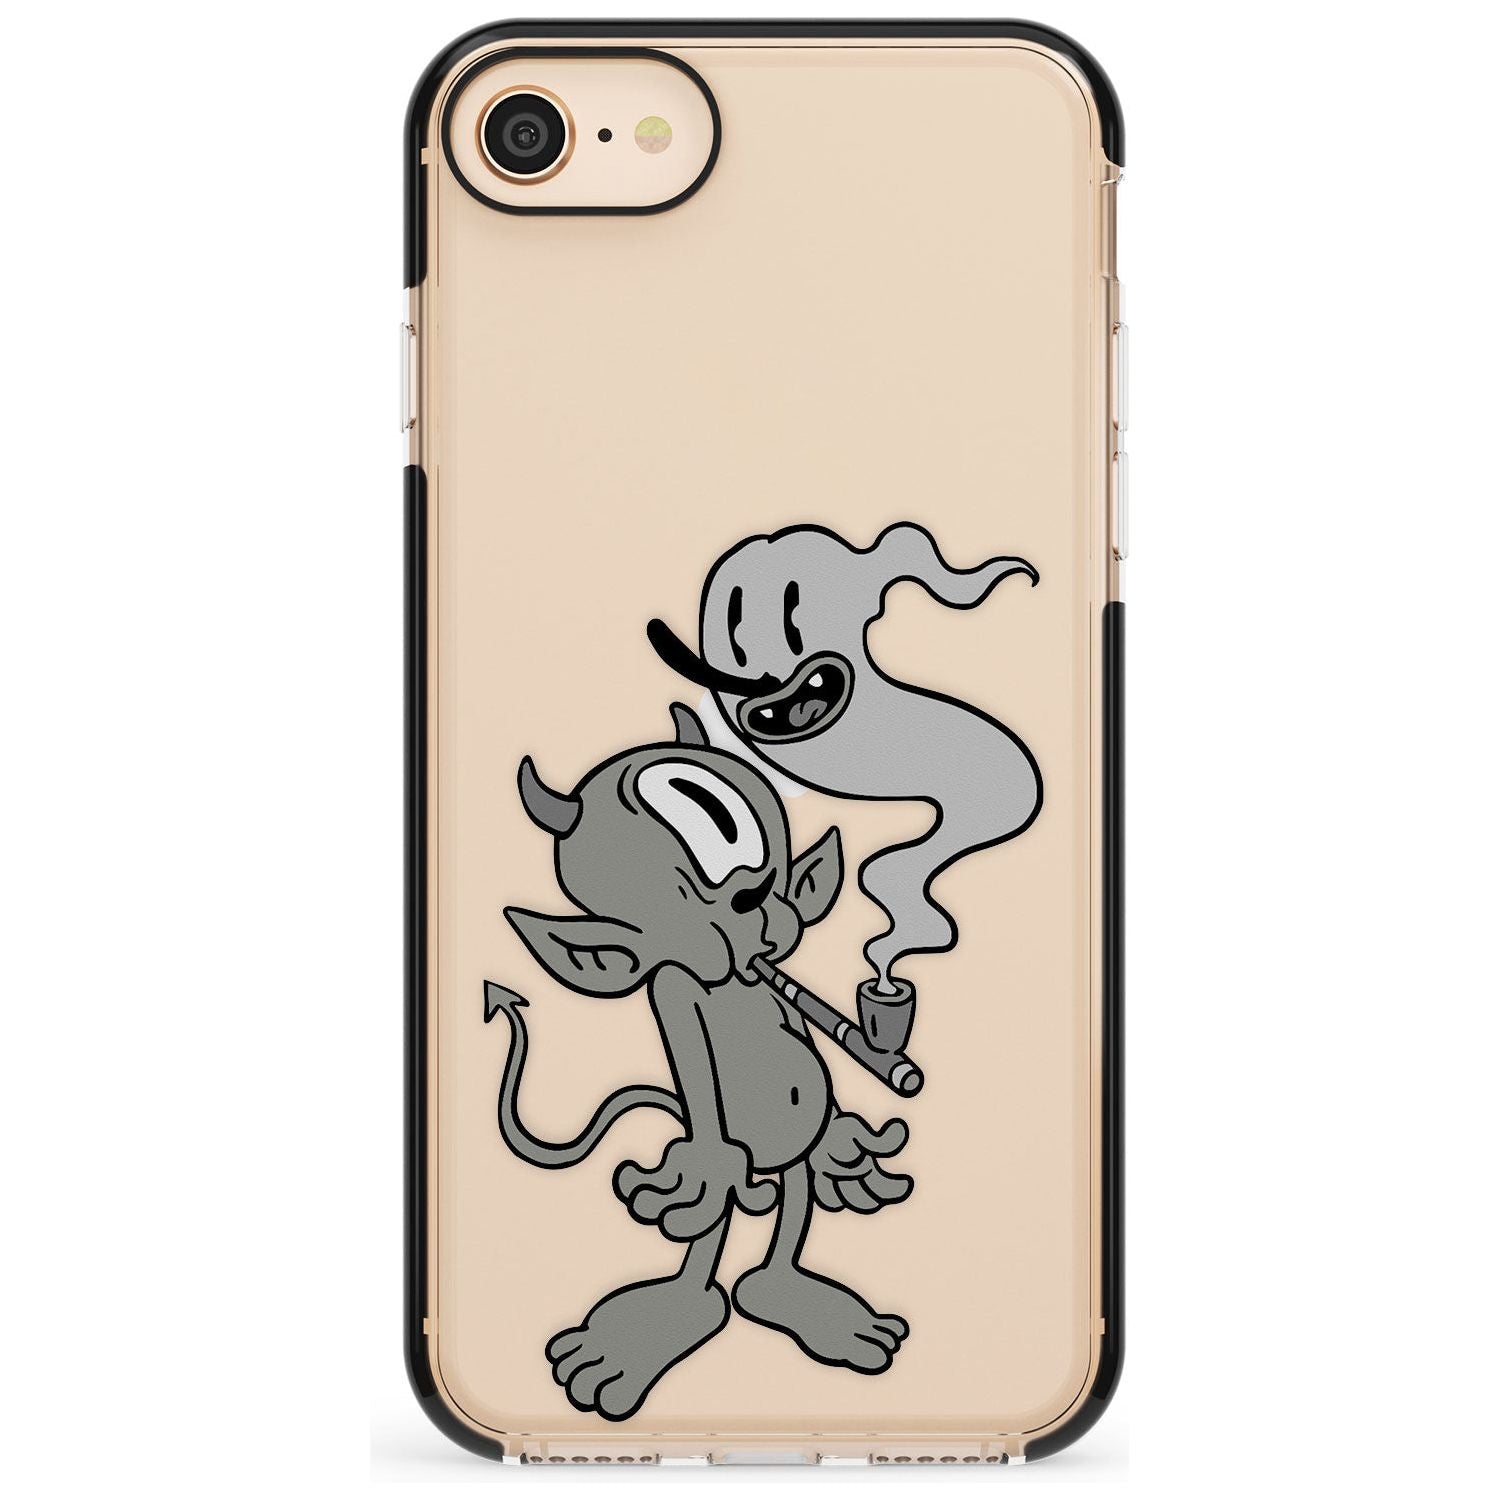 Pipe Goblin Black Impact Phone Case for iPhone SE 8 7 Plus